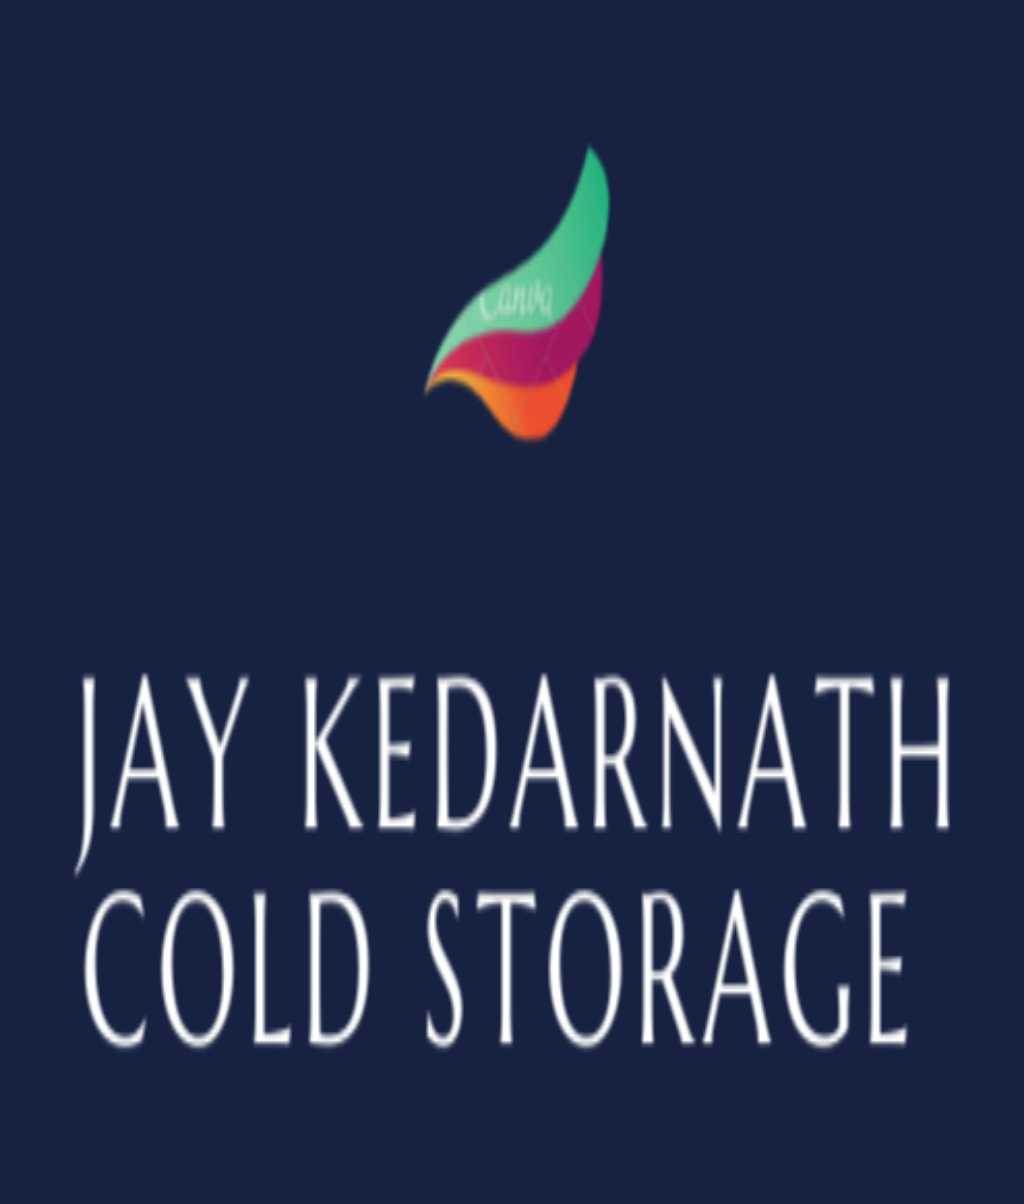 Kedarnath Cold Storage